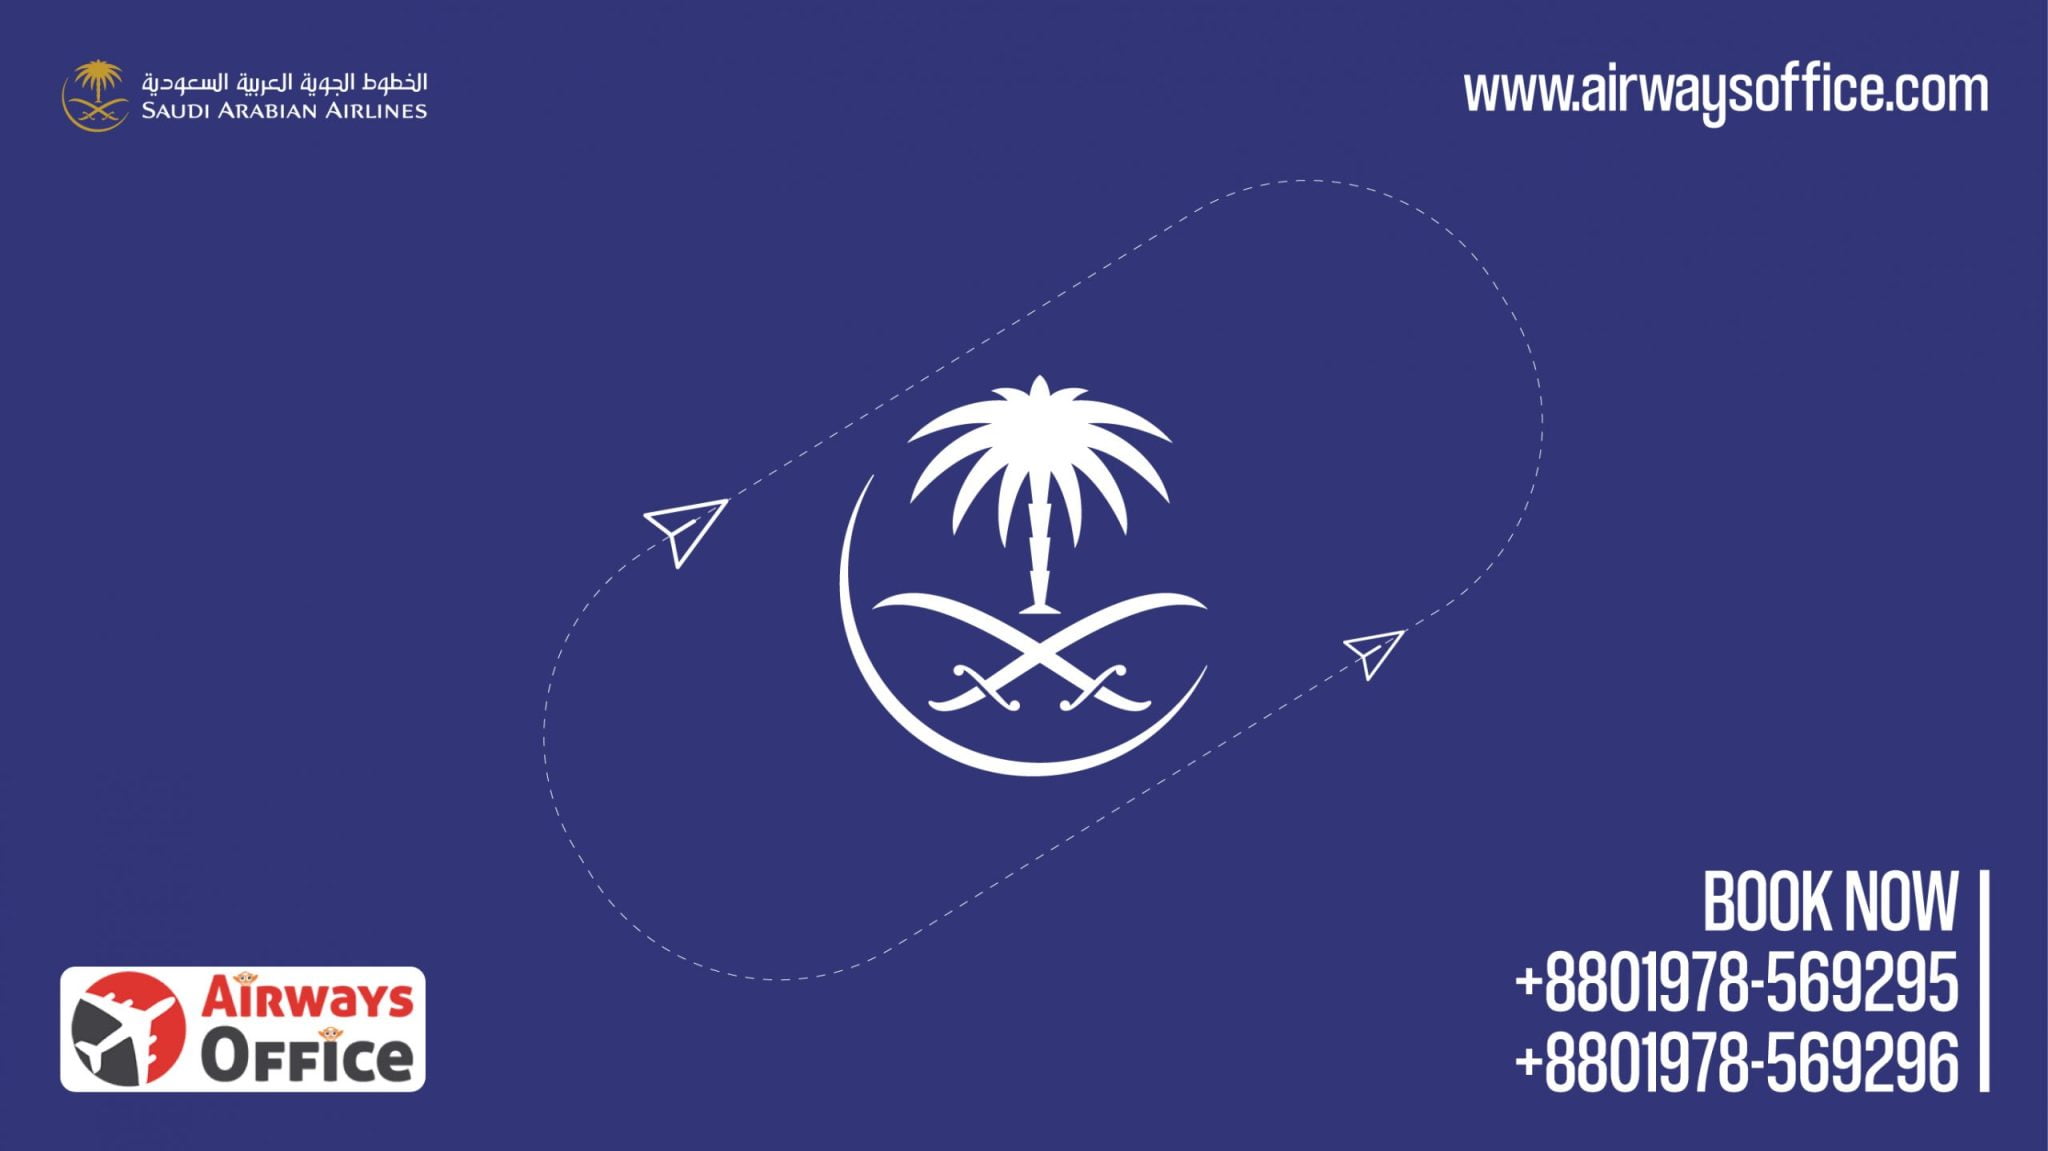 Saudi Arabian Airlines Ticket Booking Office